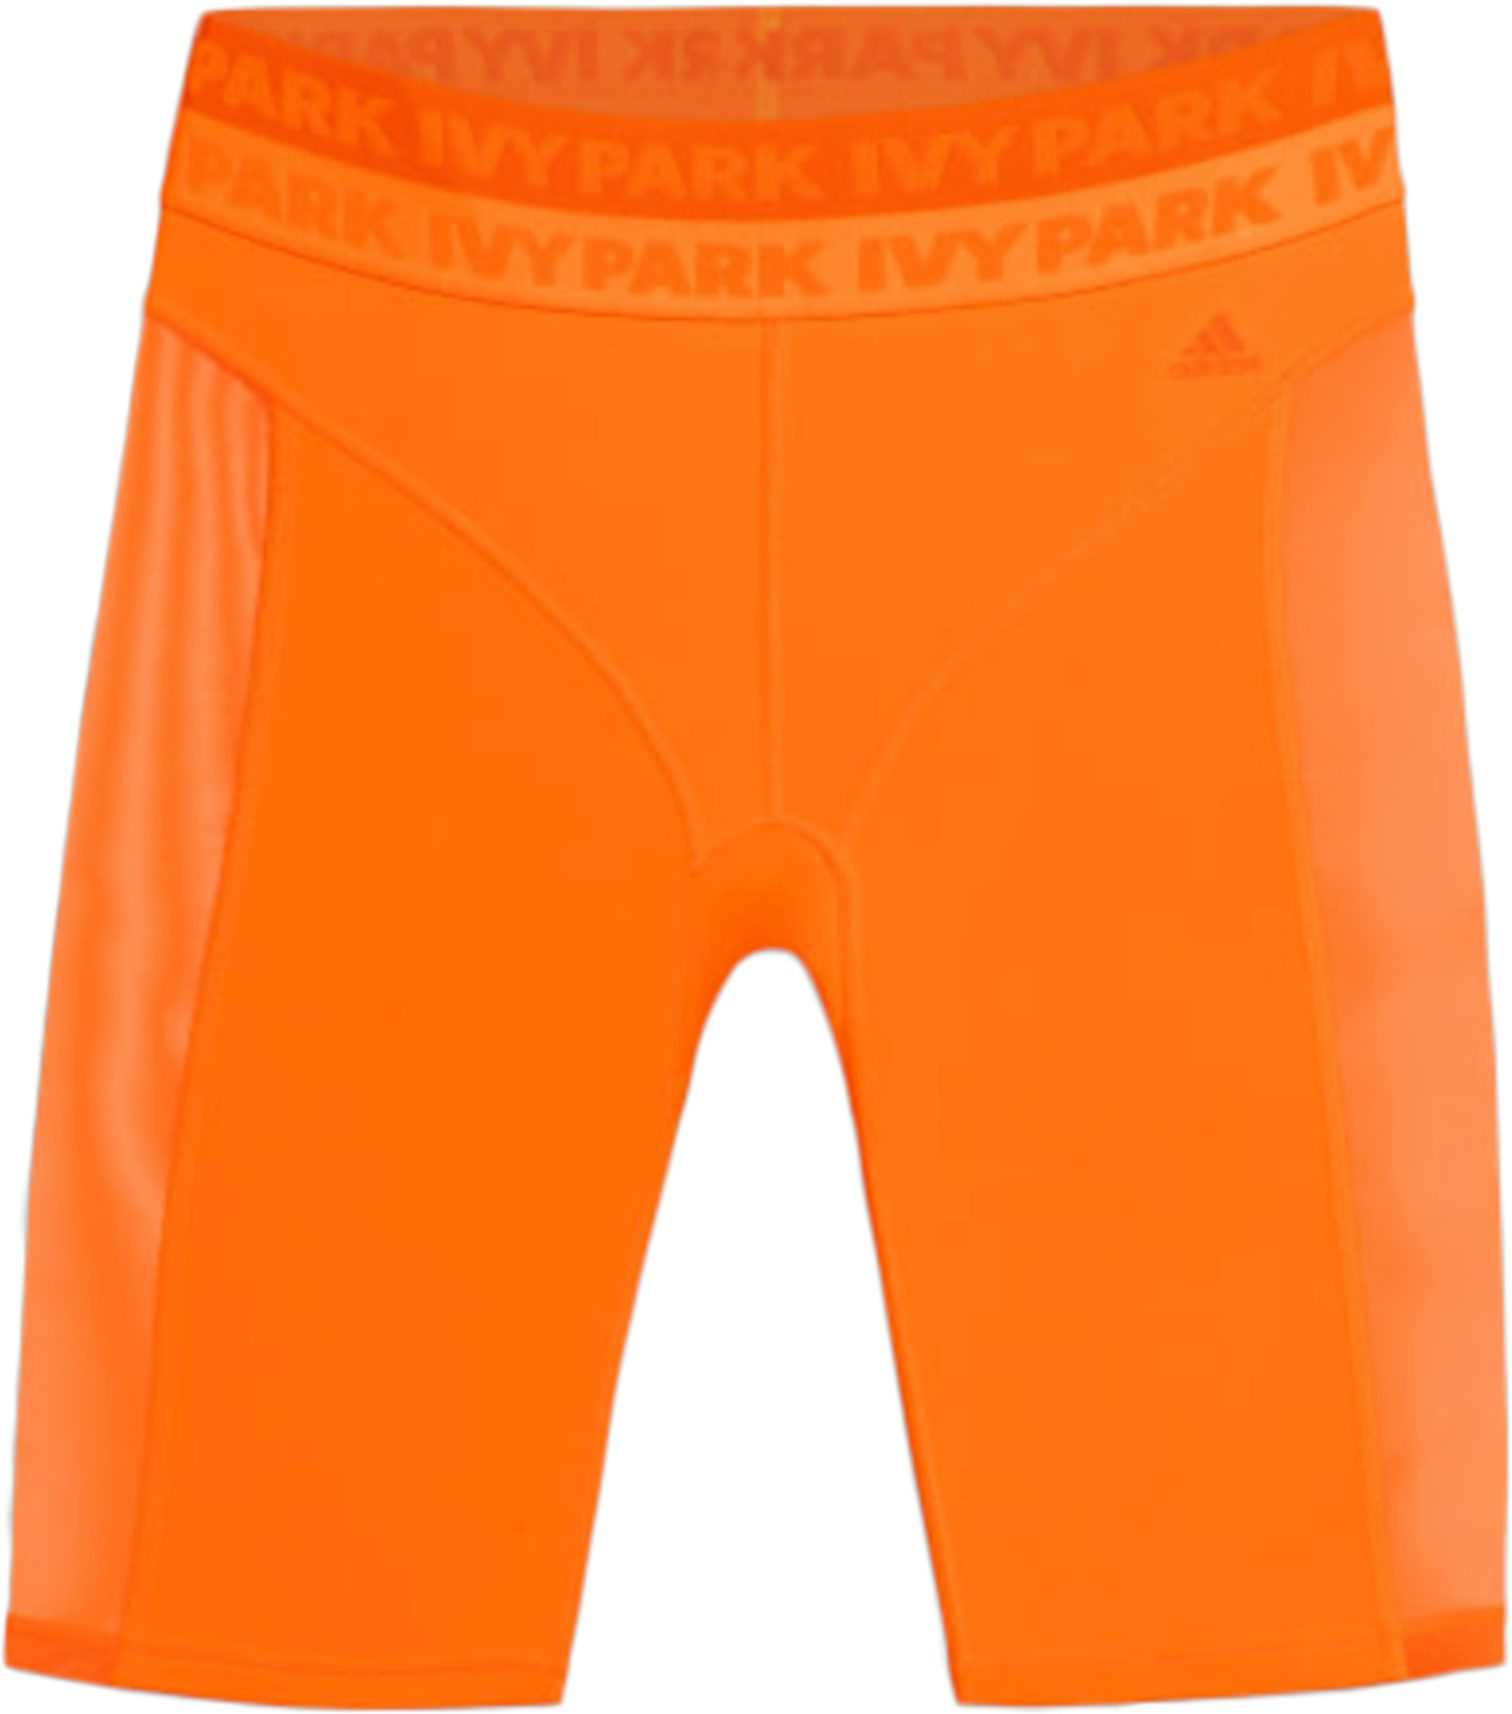 adidas Ivy Park Cycling Shorts Solar Orange/Semi Solar - FW19 - US